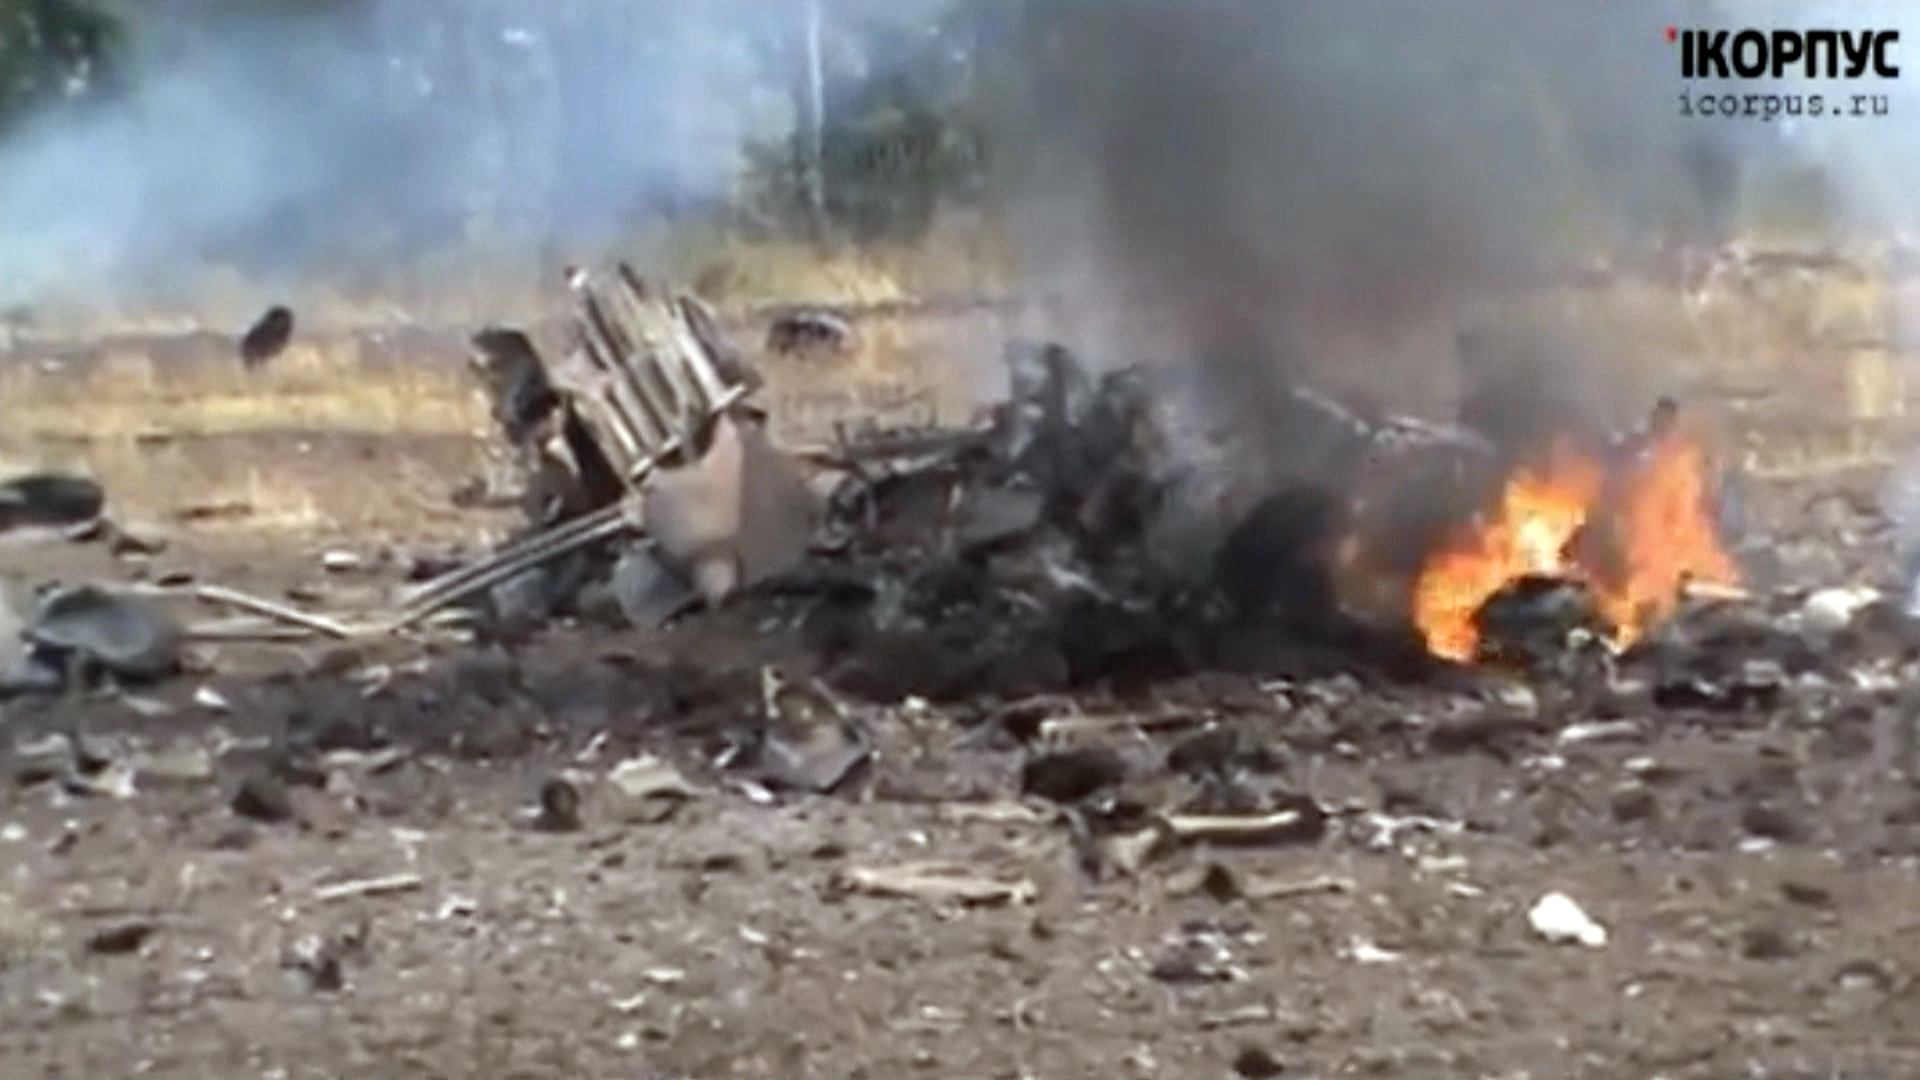 Two Ukrainian Fighter Jets Shot Down Near MH17 Crash Site - NBC News1920 x 1080